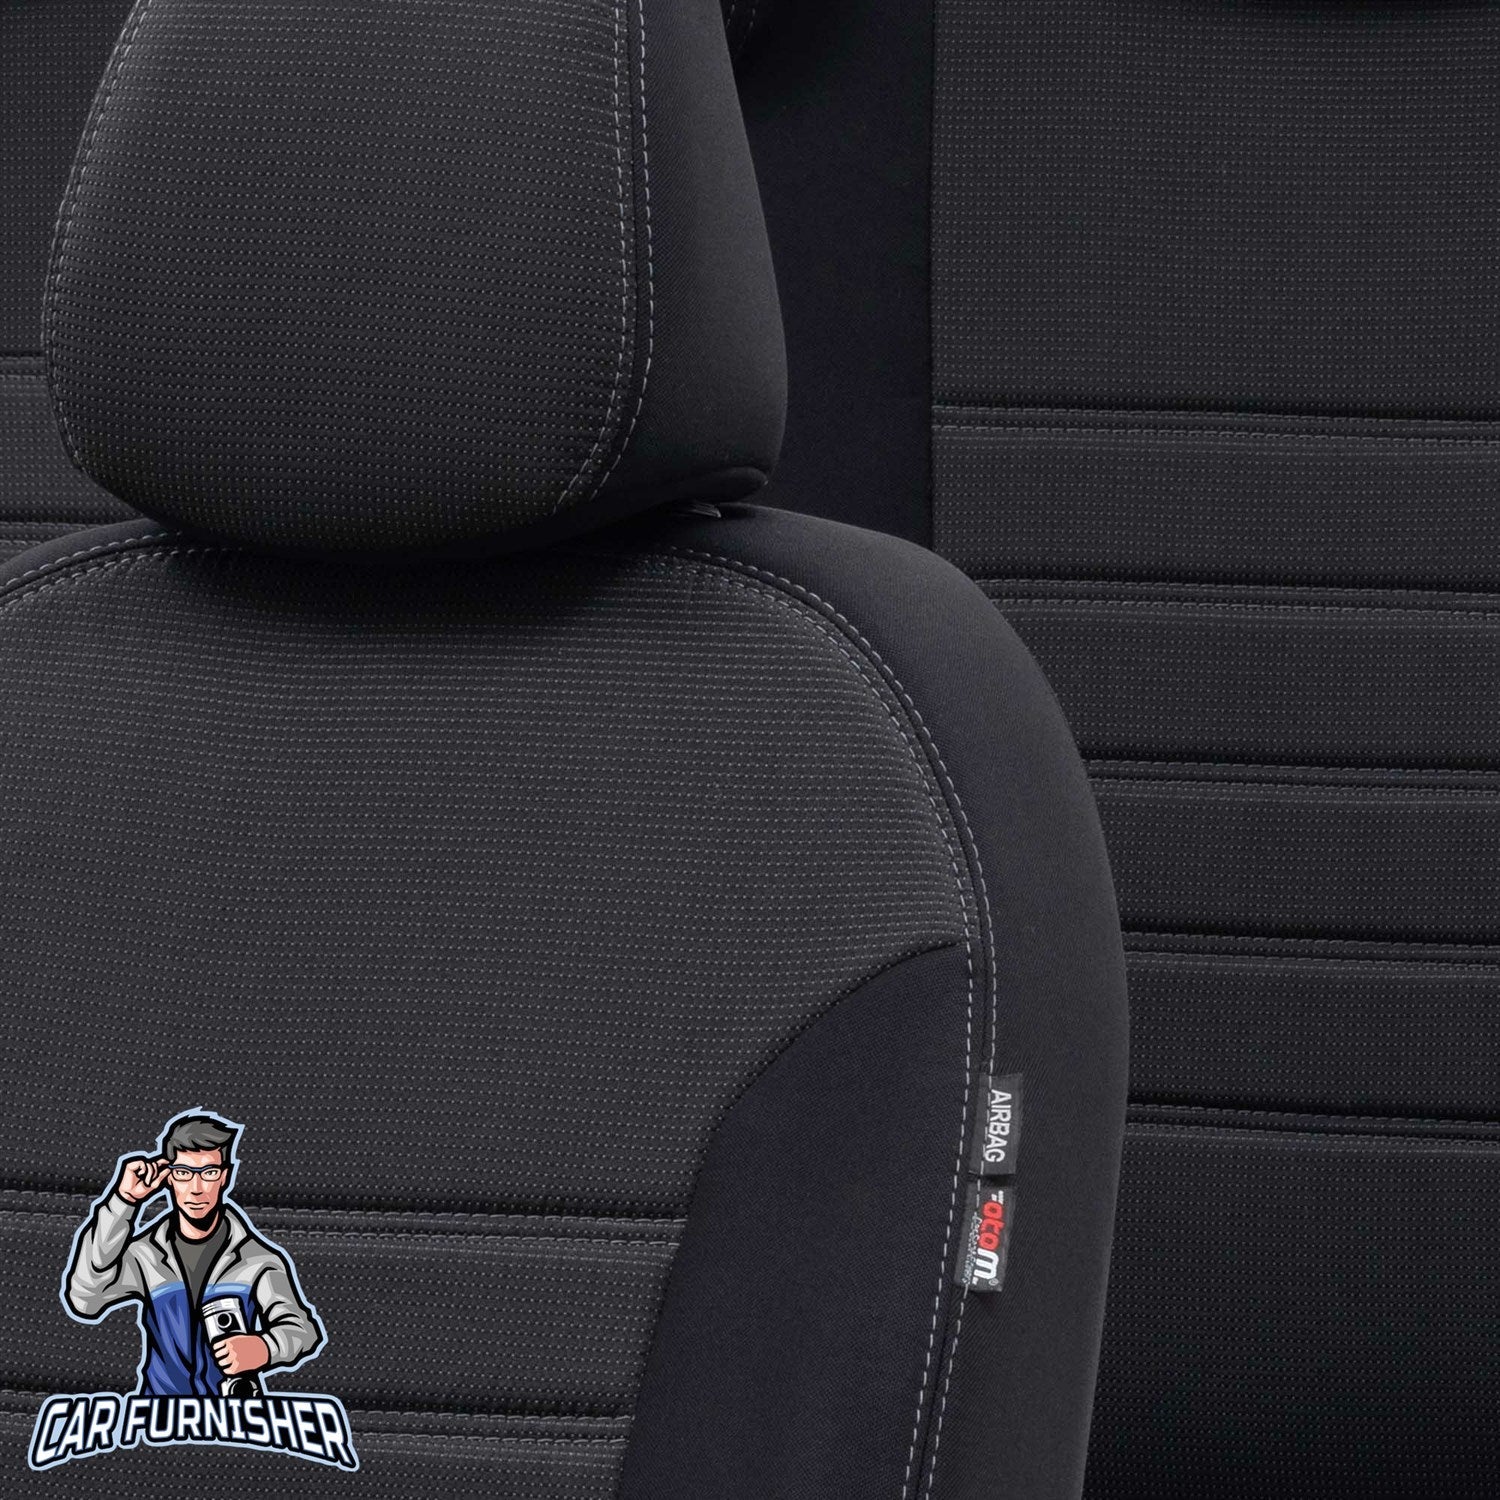 Mini Clubman Car Seat Covers 2015-2023 Original Design Dark Gray Full Set (5 Seats + Handrest) Fabric